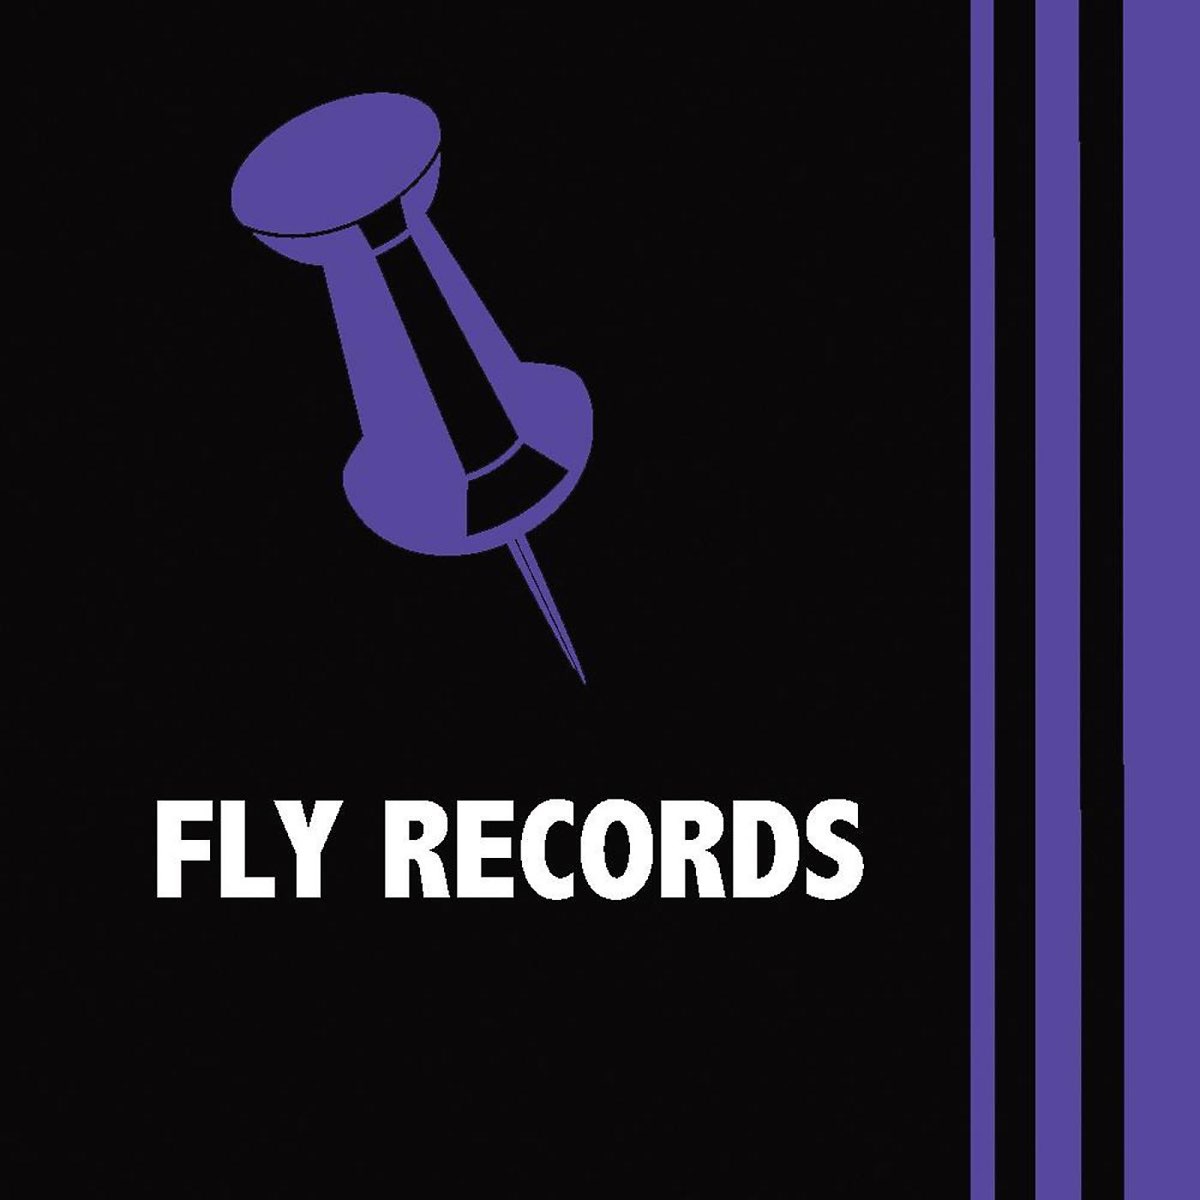 Fly записи. Fly records в картинках.